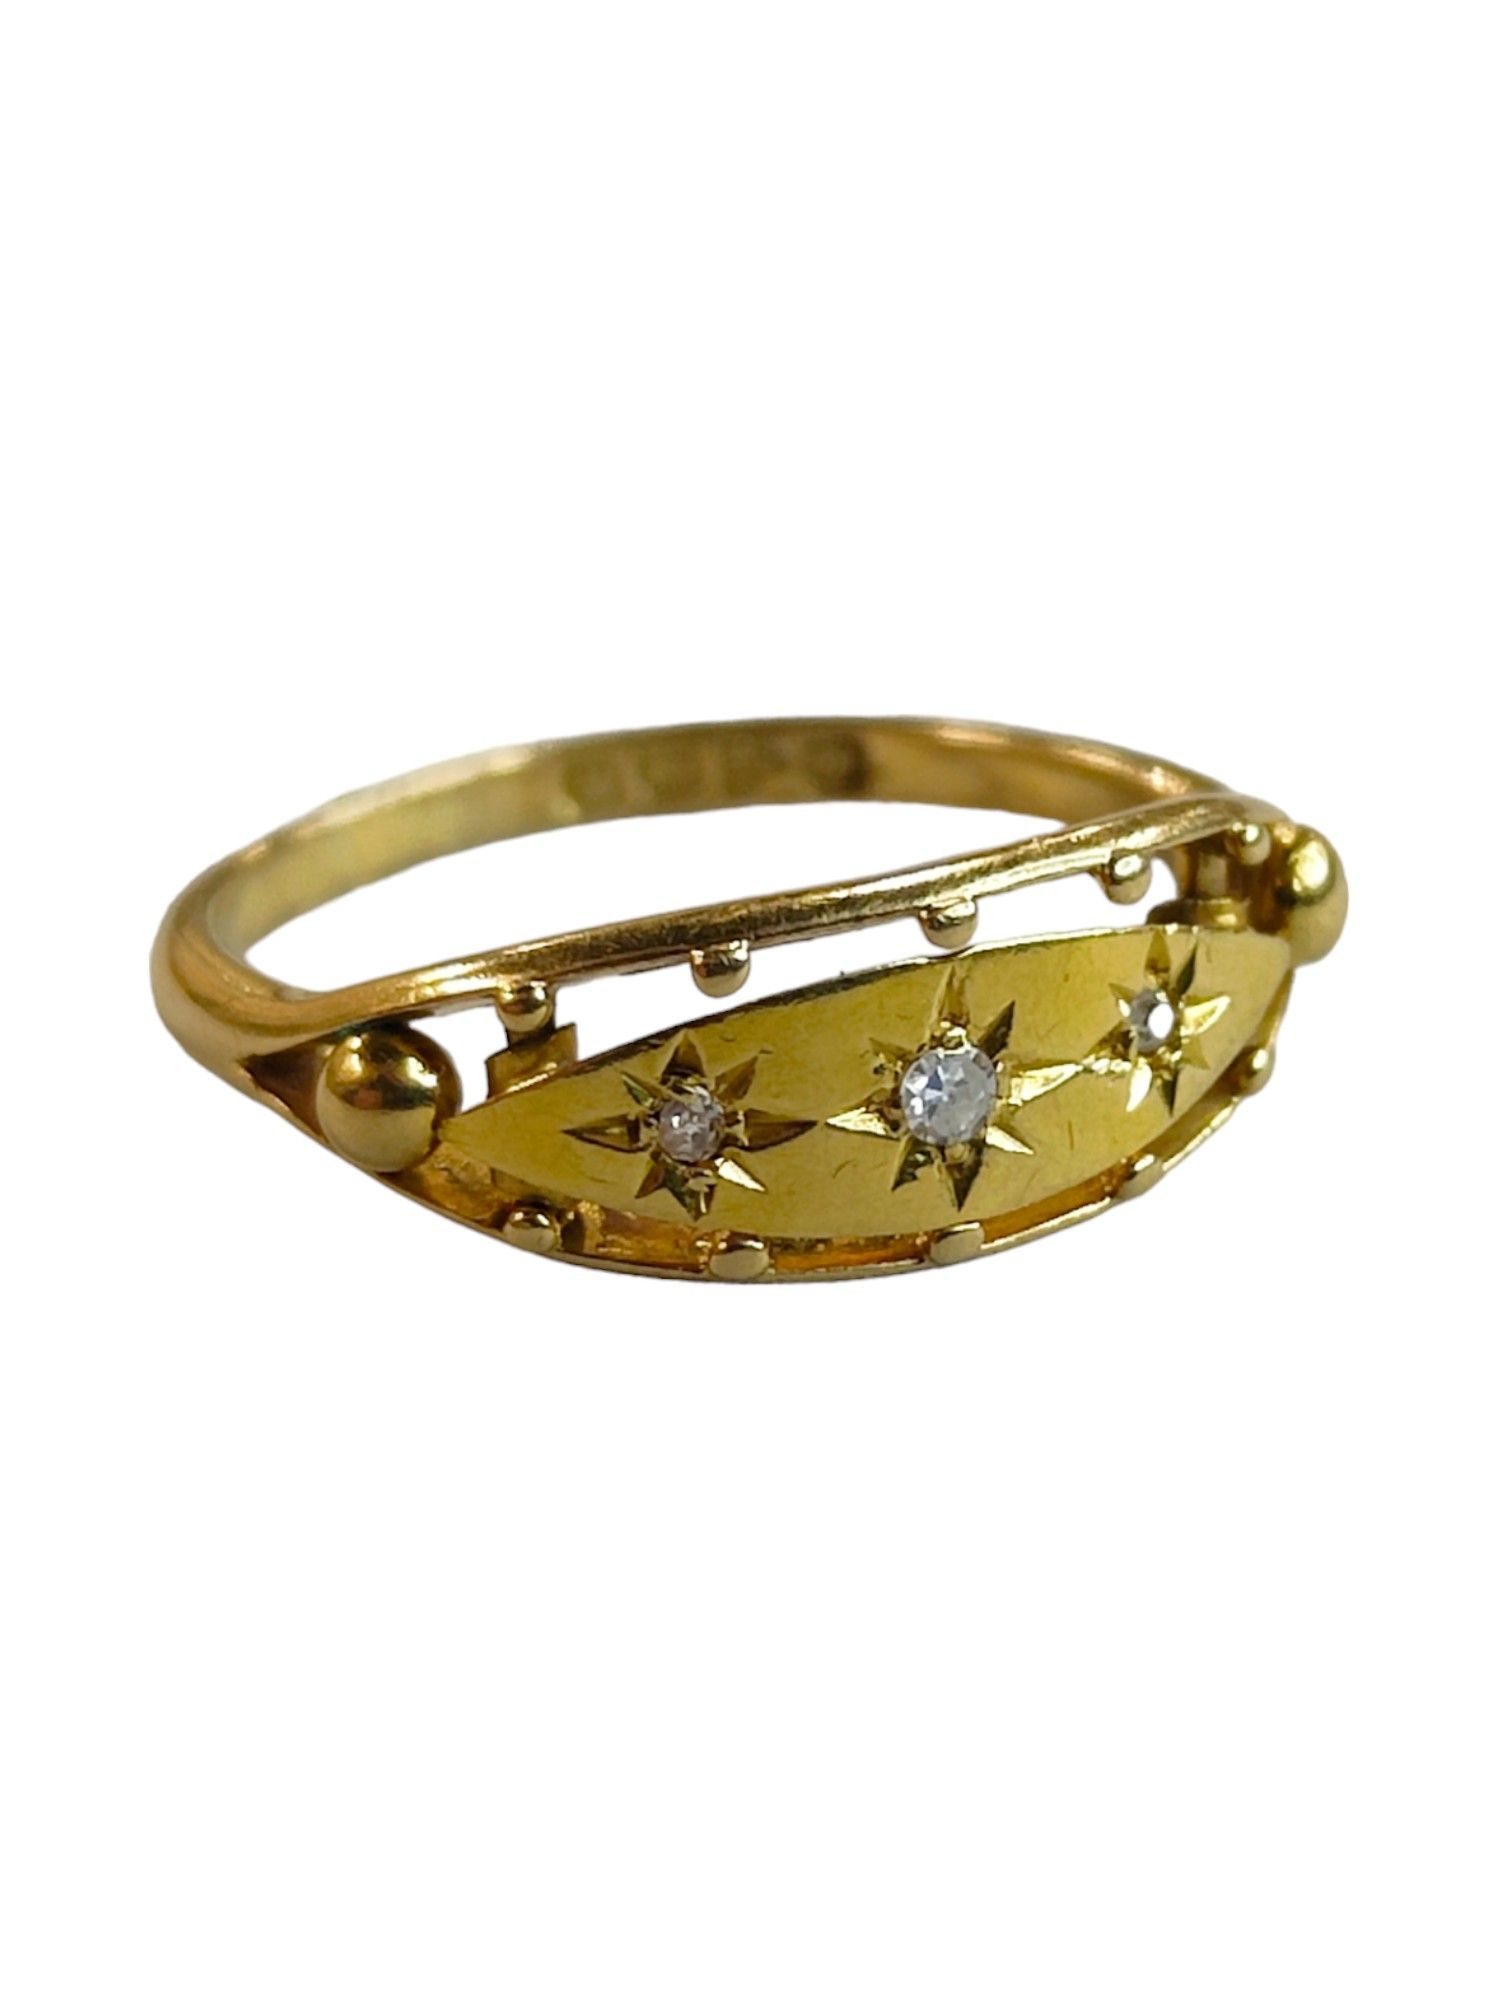 18 CARAT YELLOW GOLD AND DIAMOND RING - CIRCA 1911